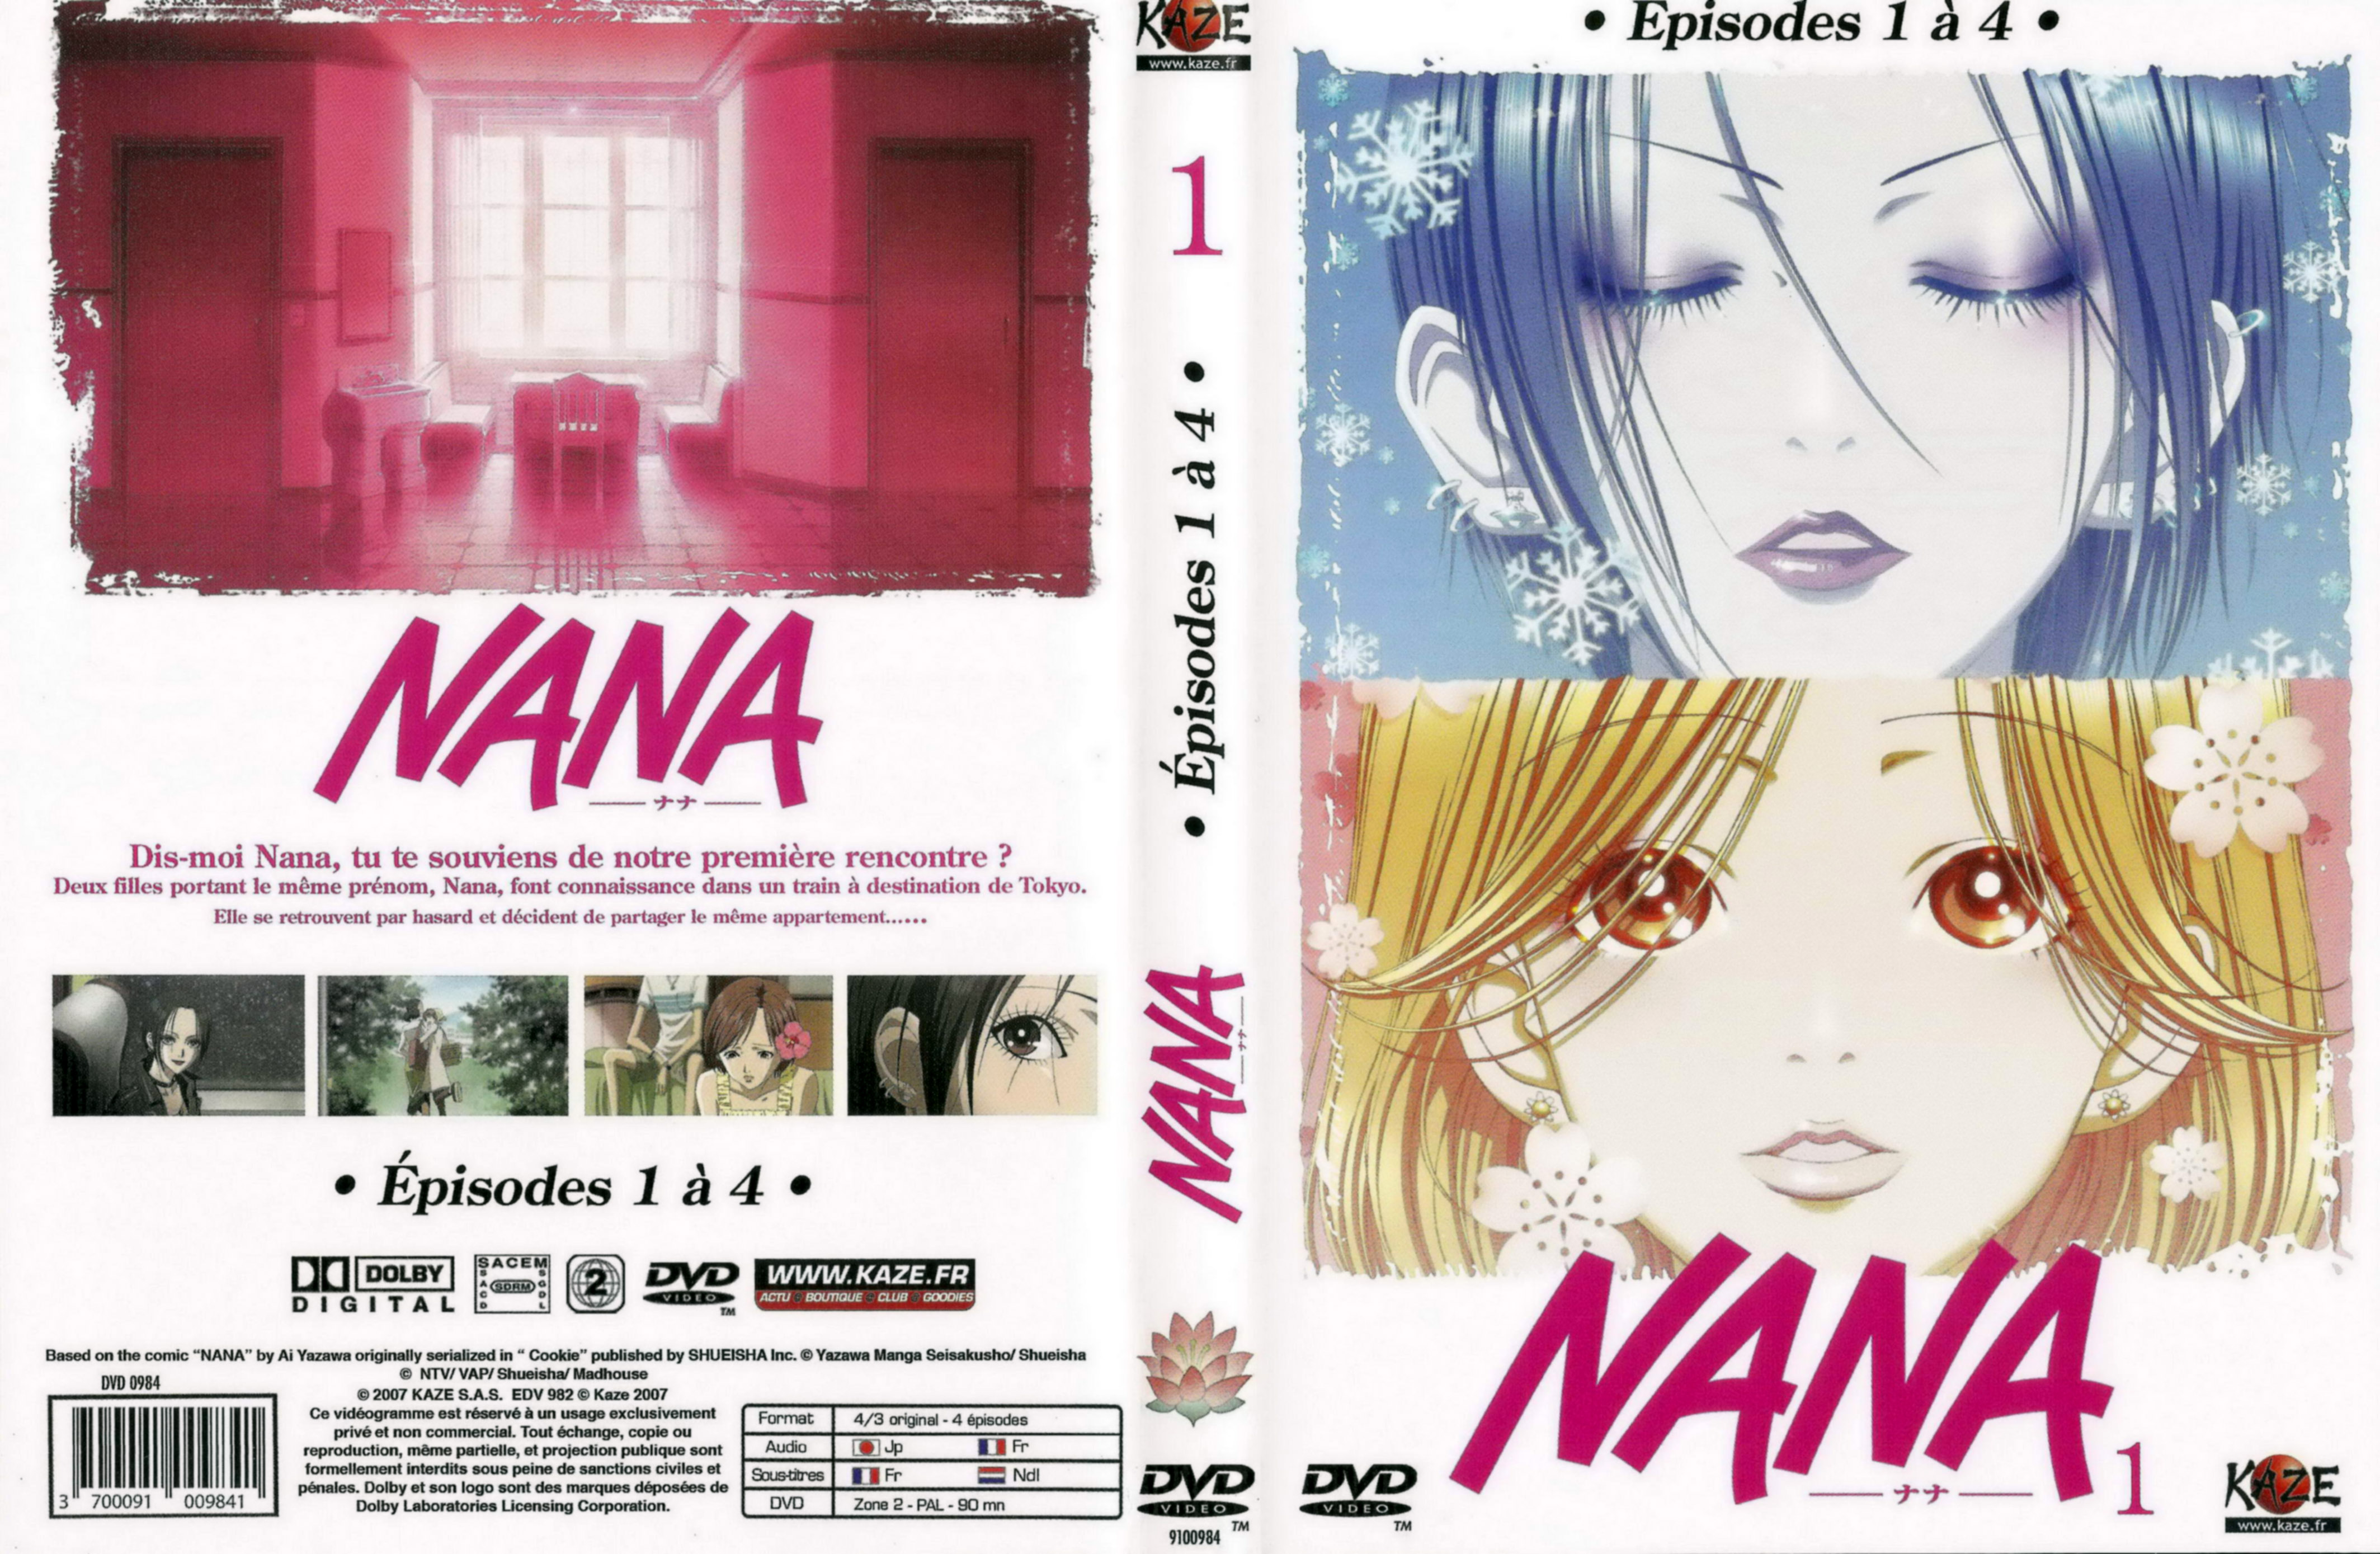 Jaquette DVD Nana DVD 1